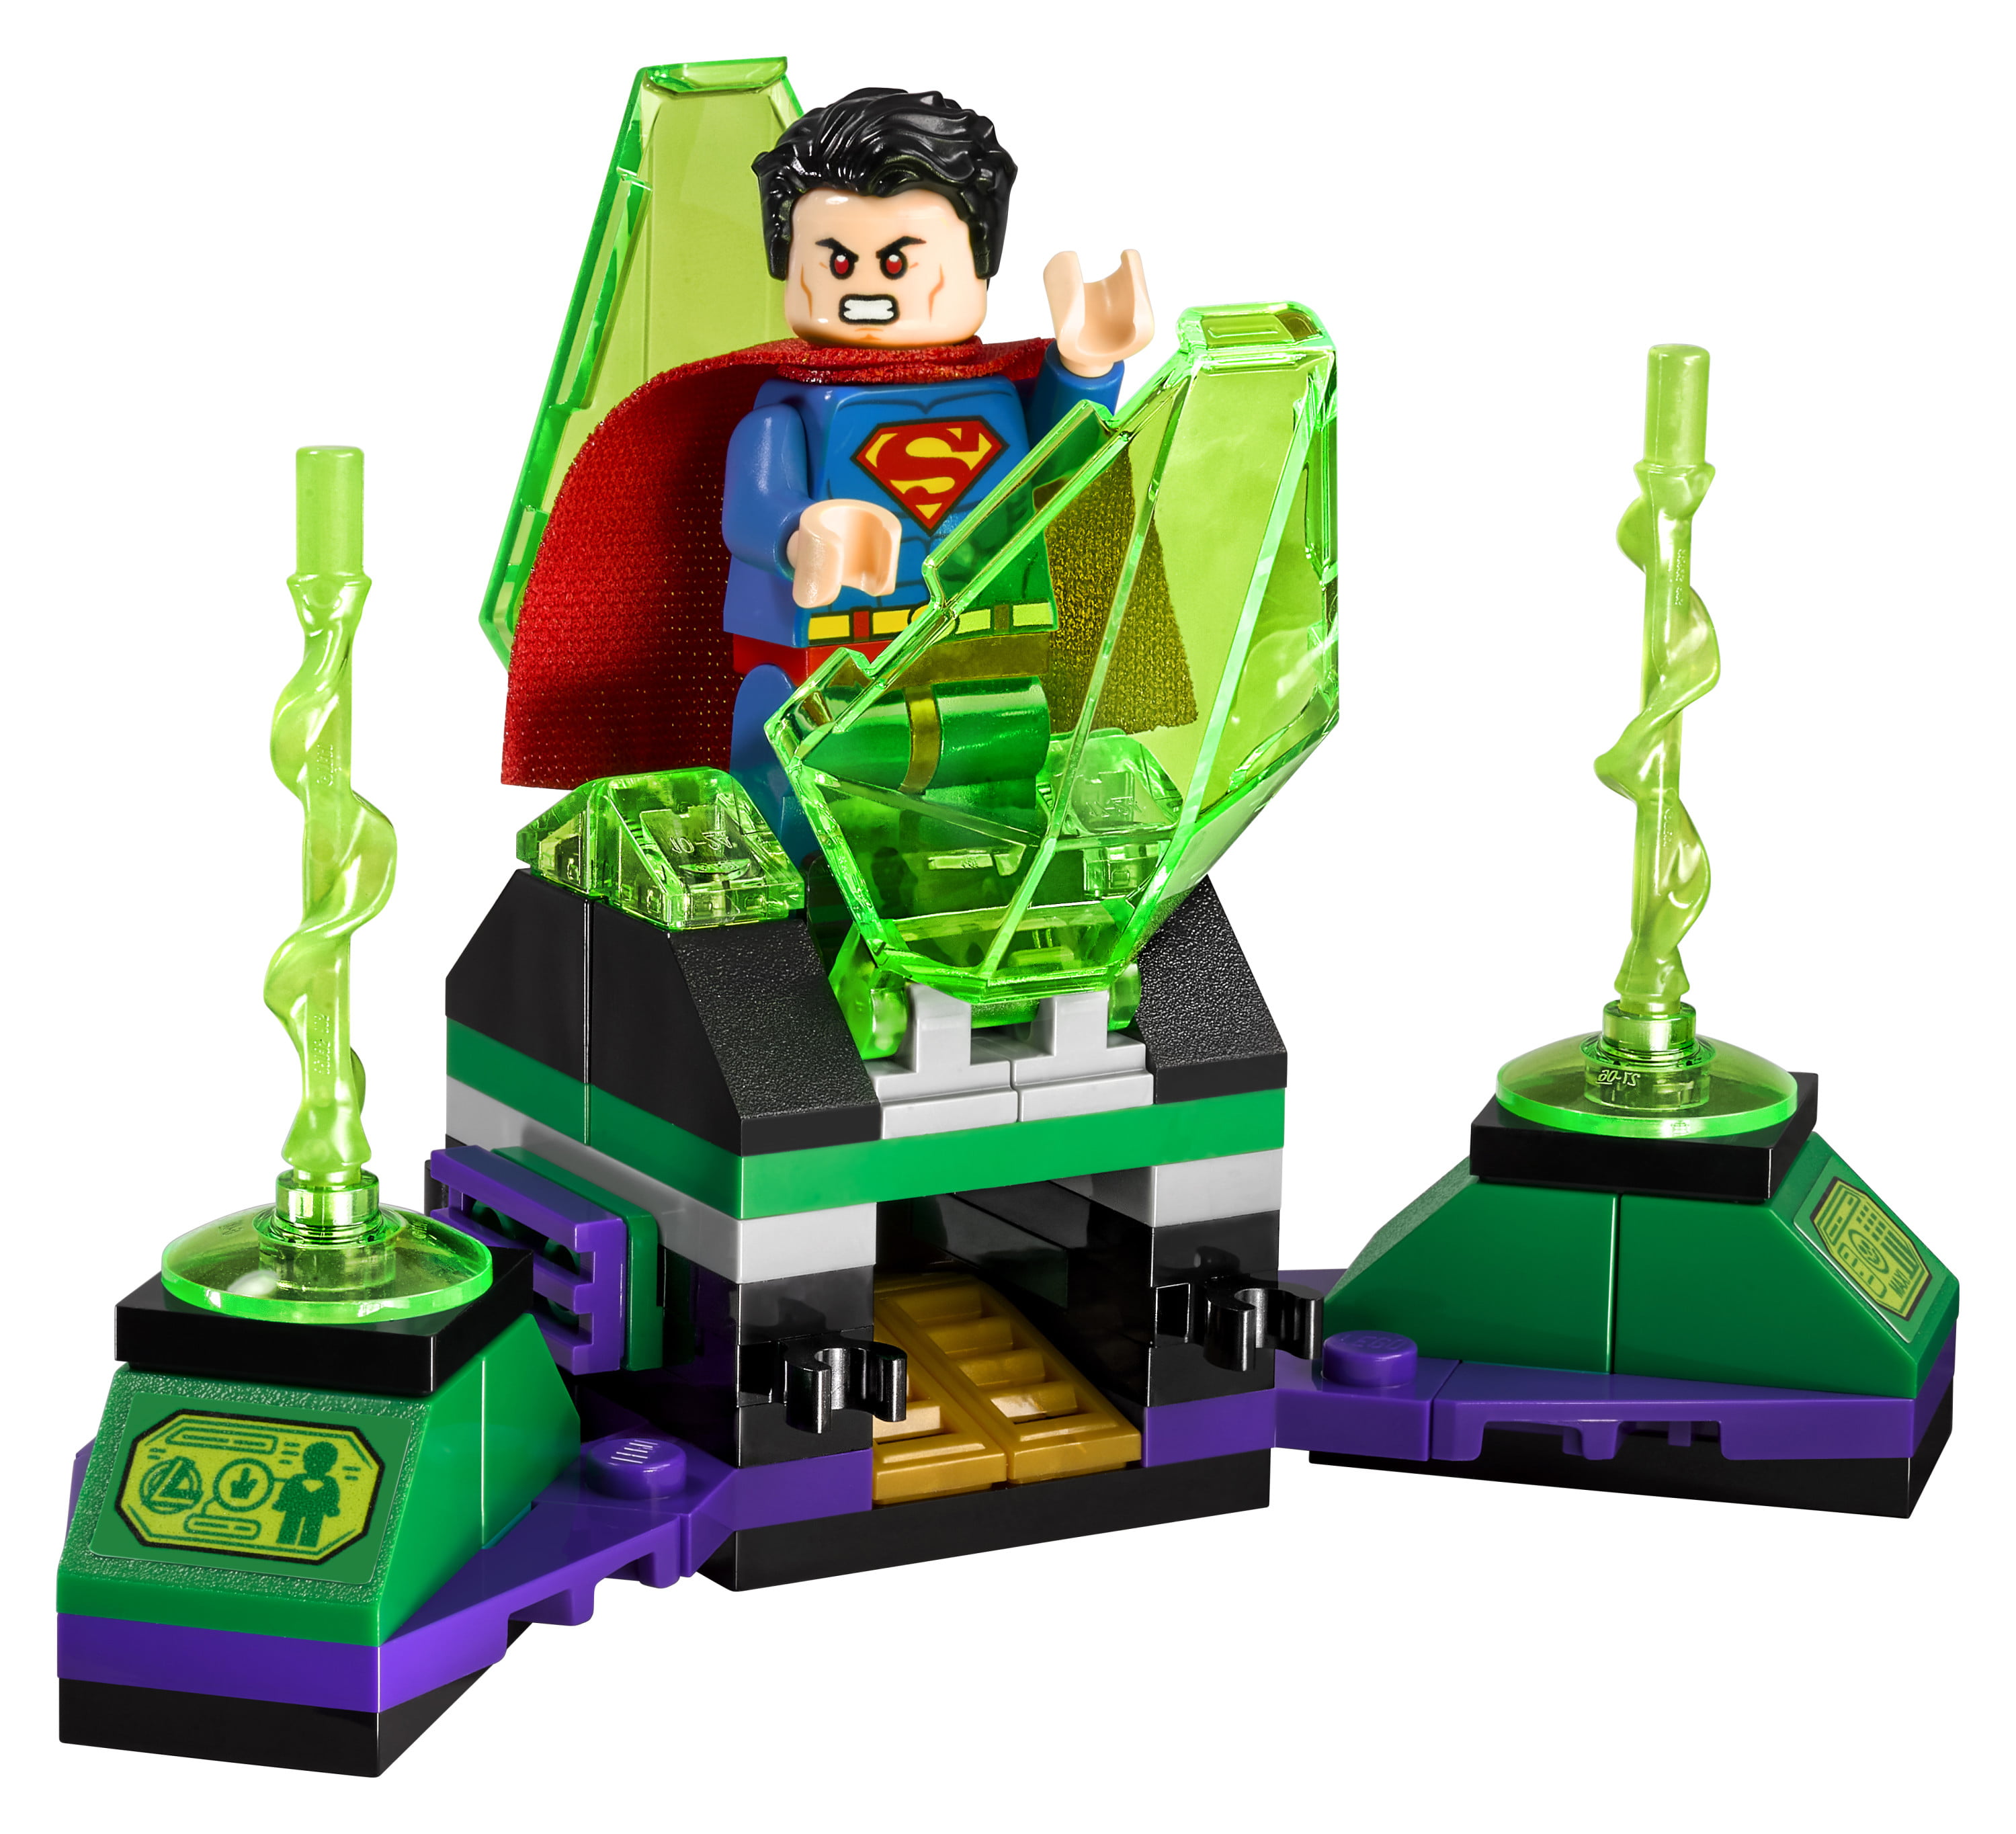 Sømil Original mestre LEGO Super Heroes Superman & Krypto Team-Up 76096 (196 Pieces) - Walmart.com